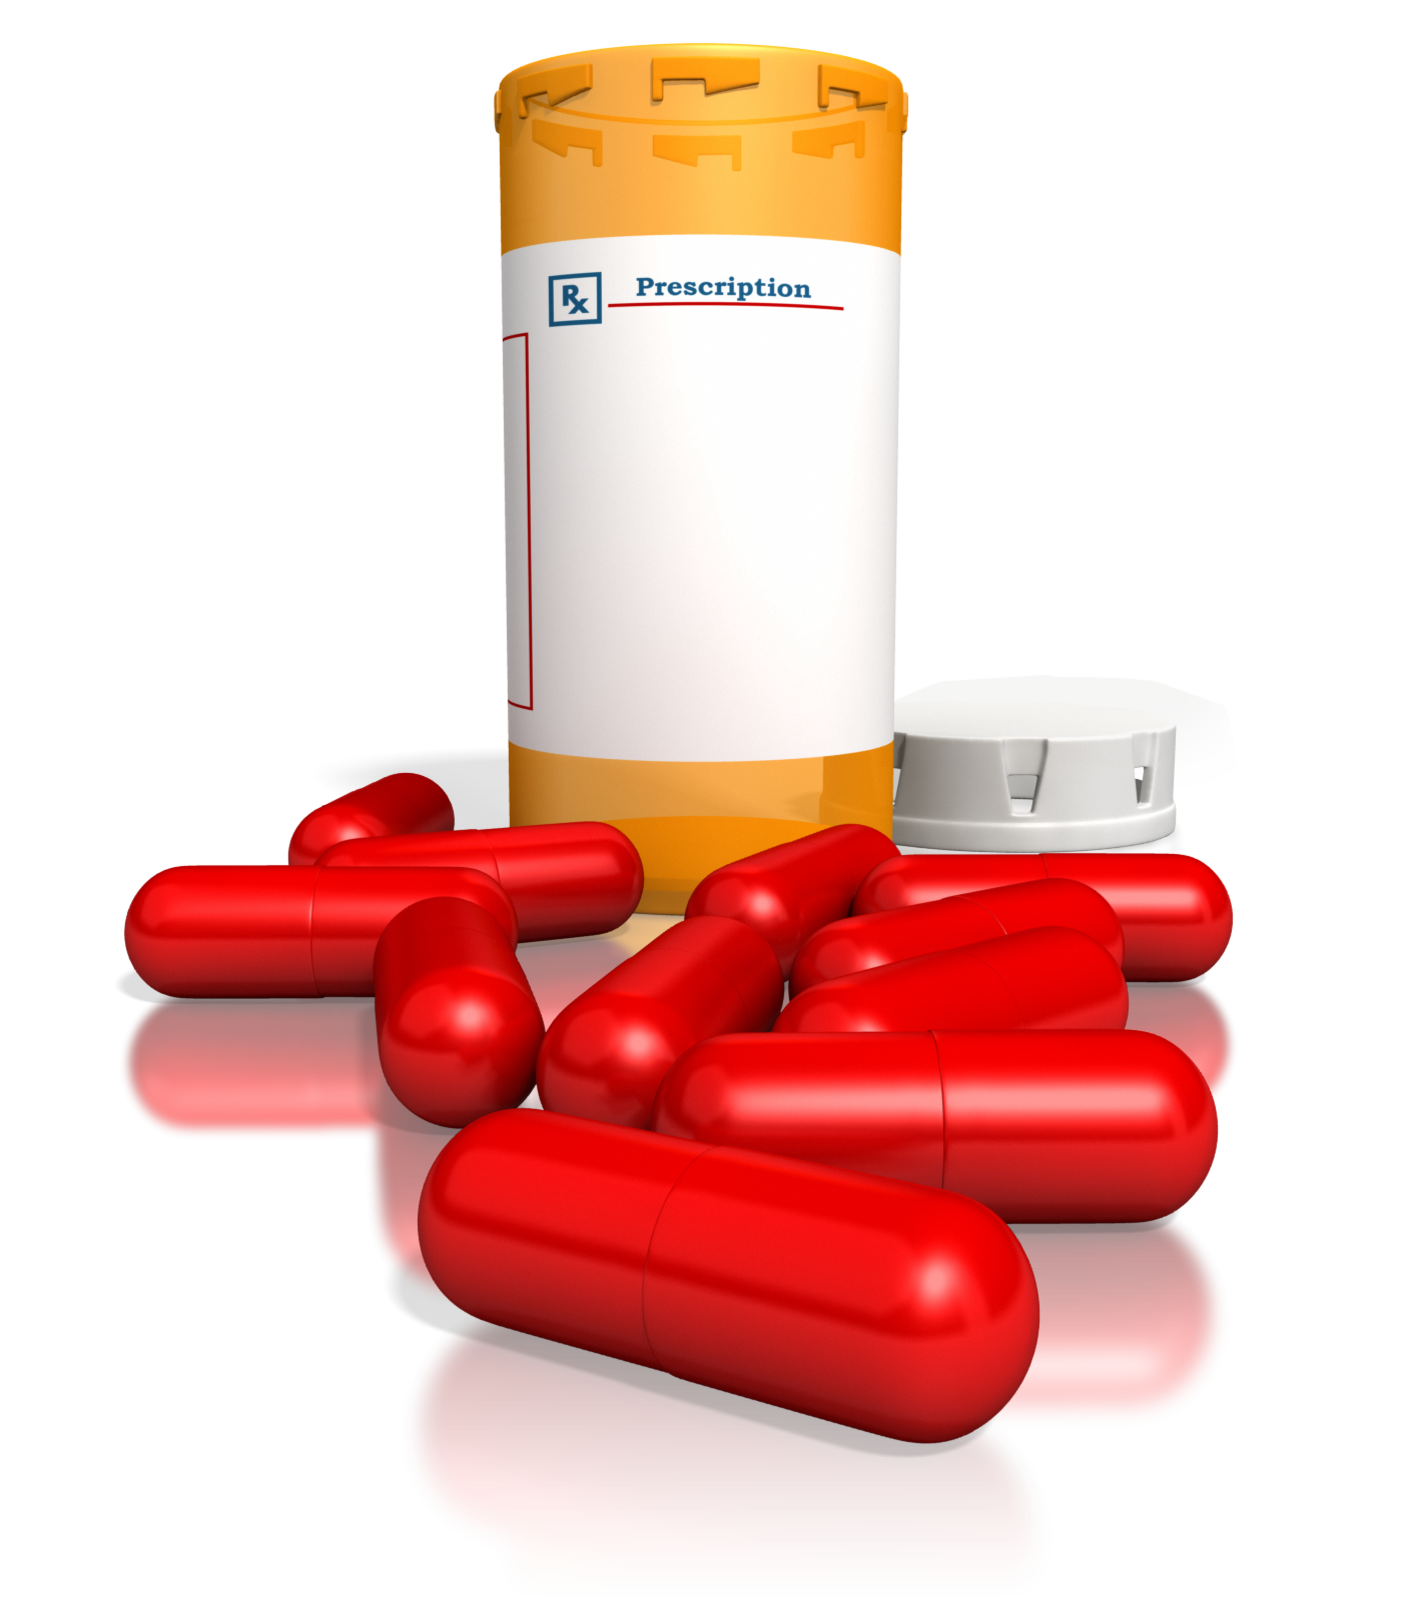 Prescription Drug Bottle Clip Art